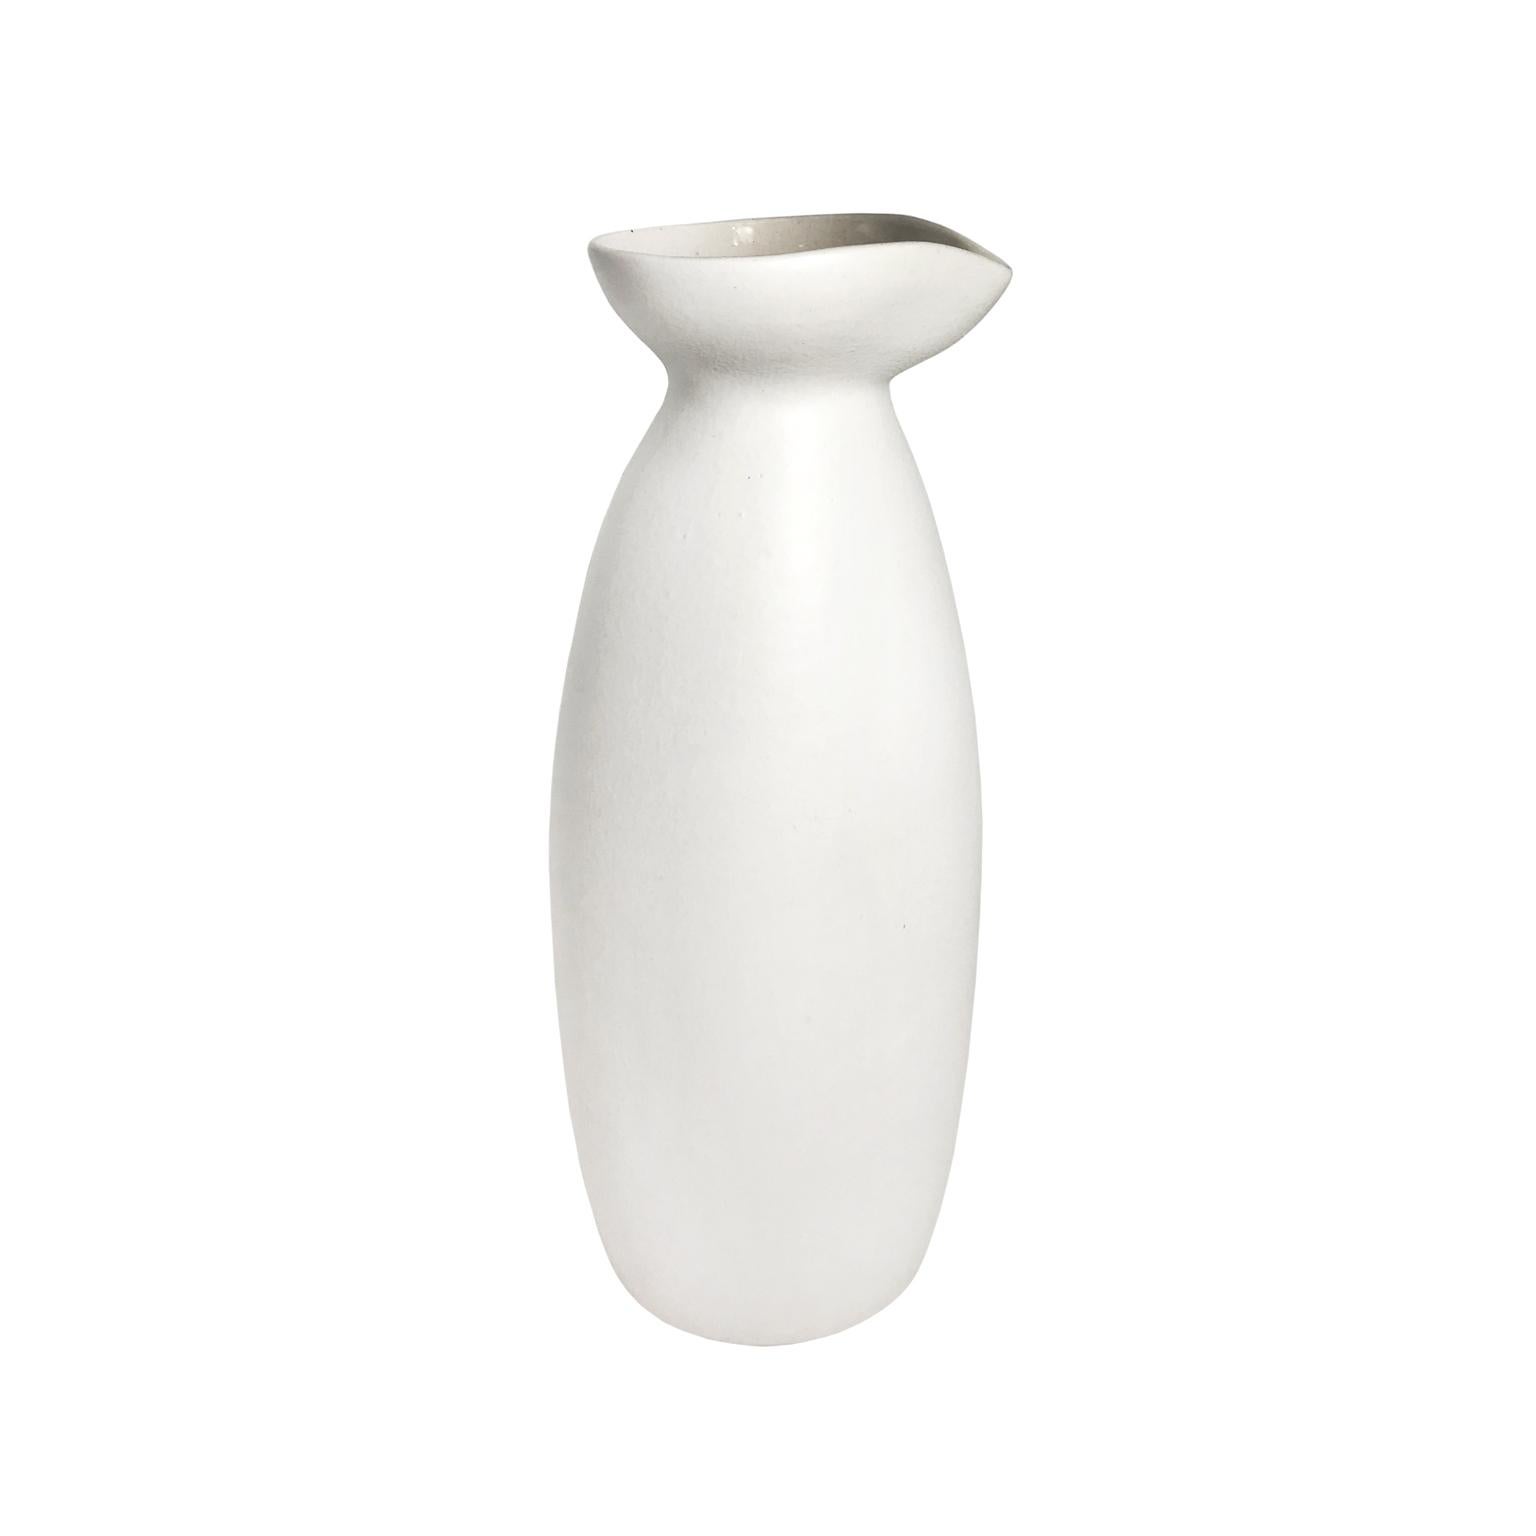 American Alabaster Glaze Ceramic Vase #4 with Spout by Sandi Fellman